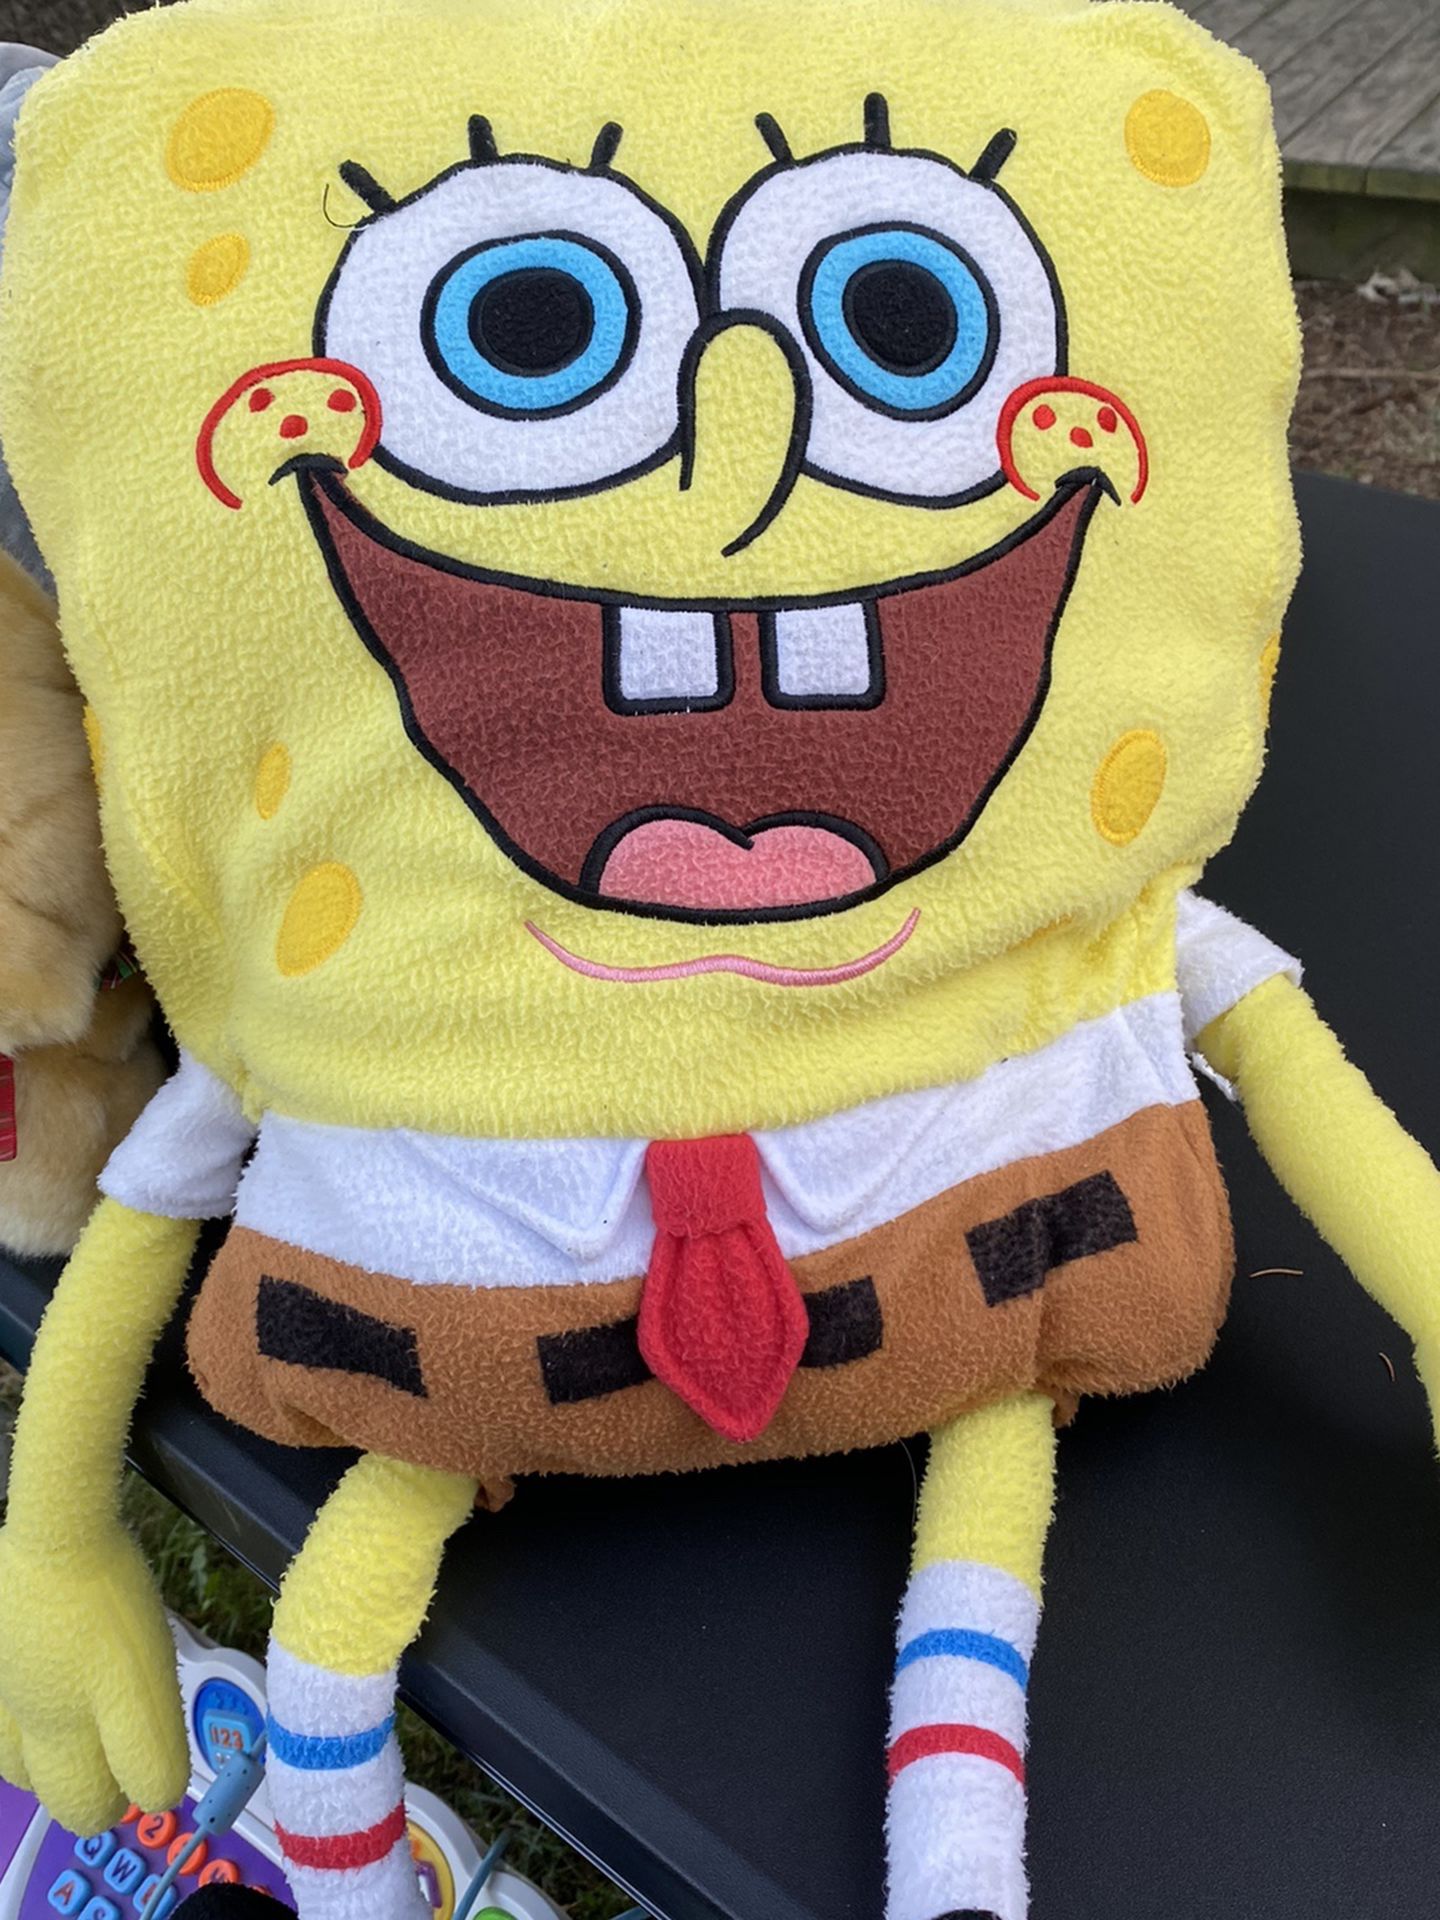 Sponge Bob Plush Toy - Think Christmas!